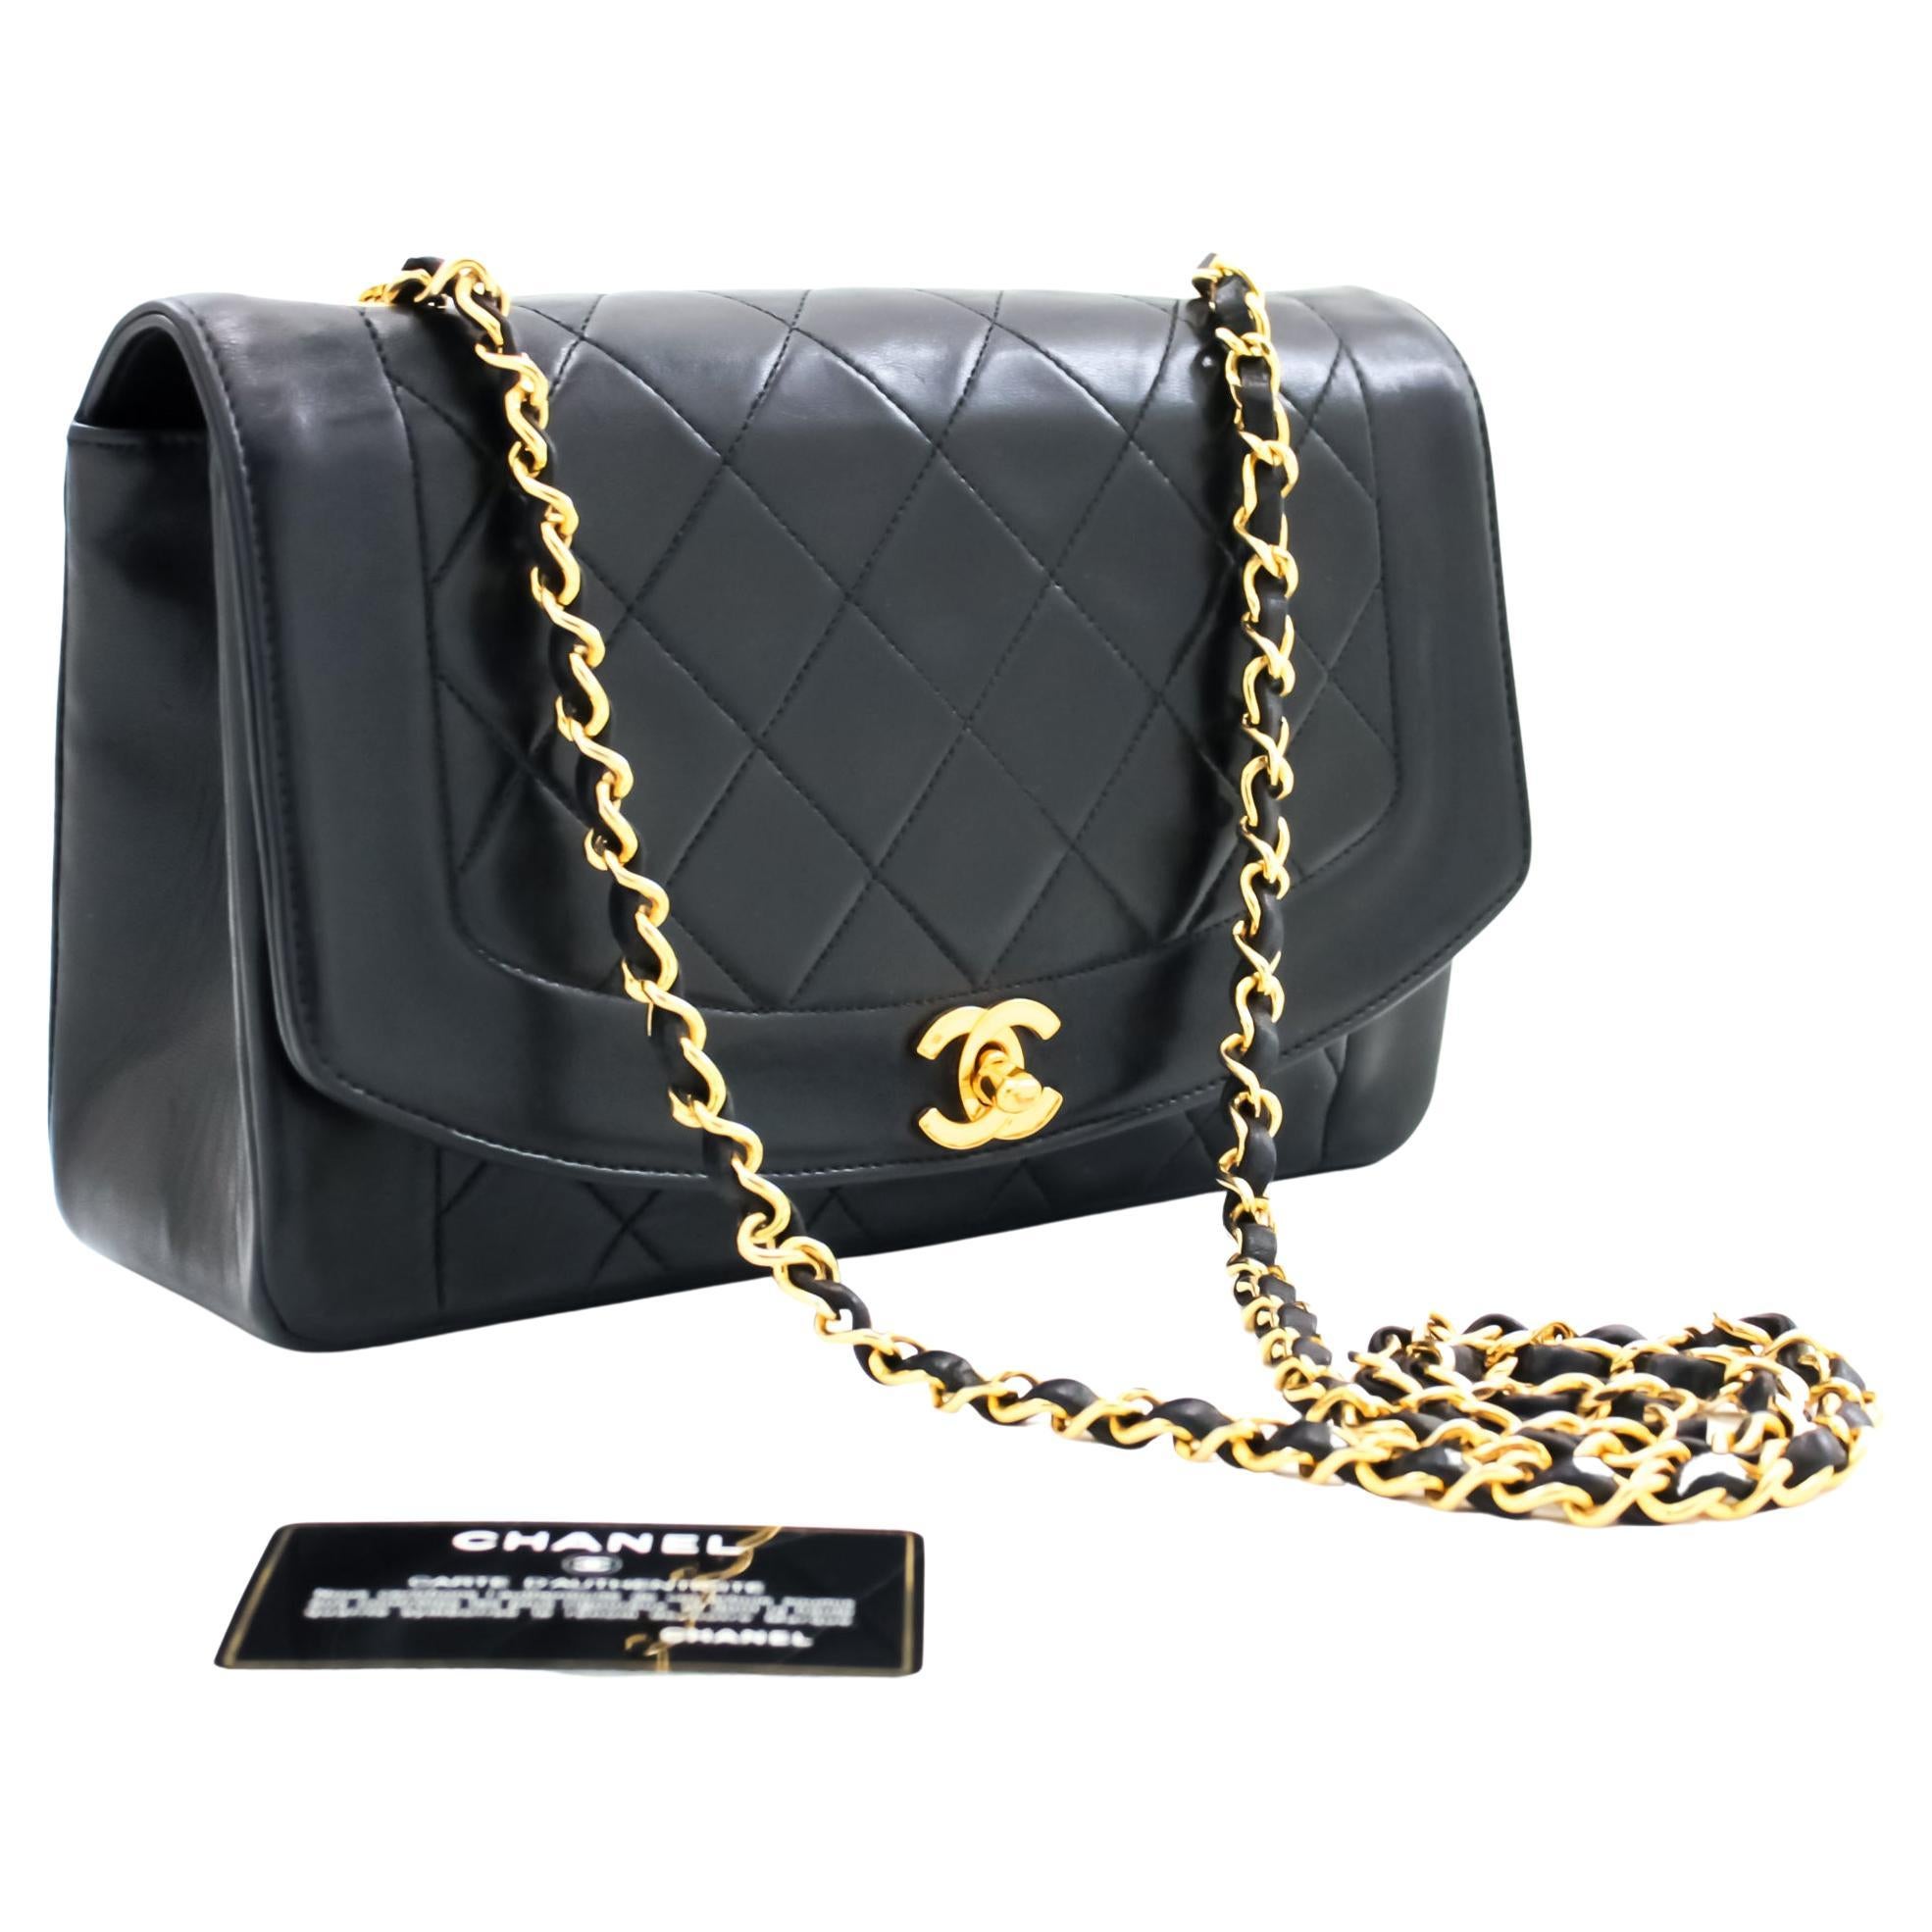 Chanel Diana Flap Bag - 13 For Sale on 1stDibs